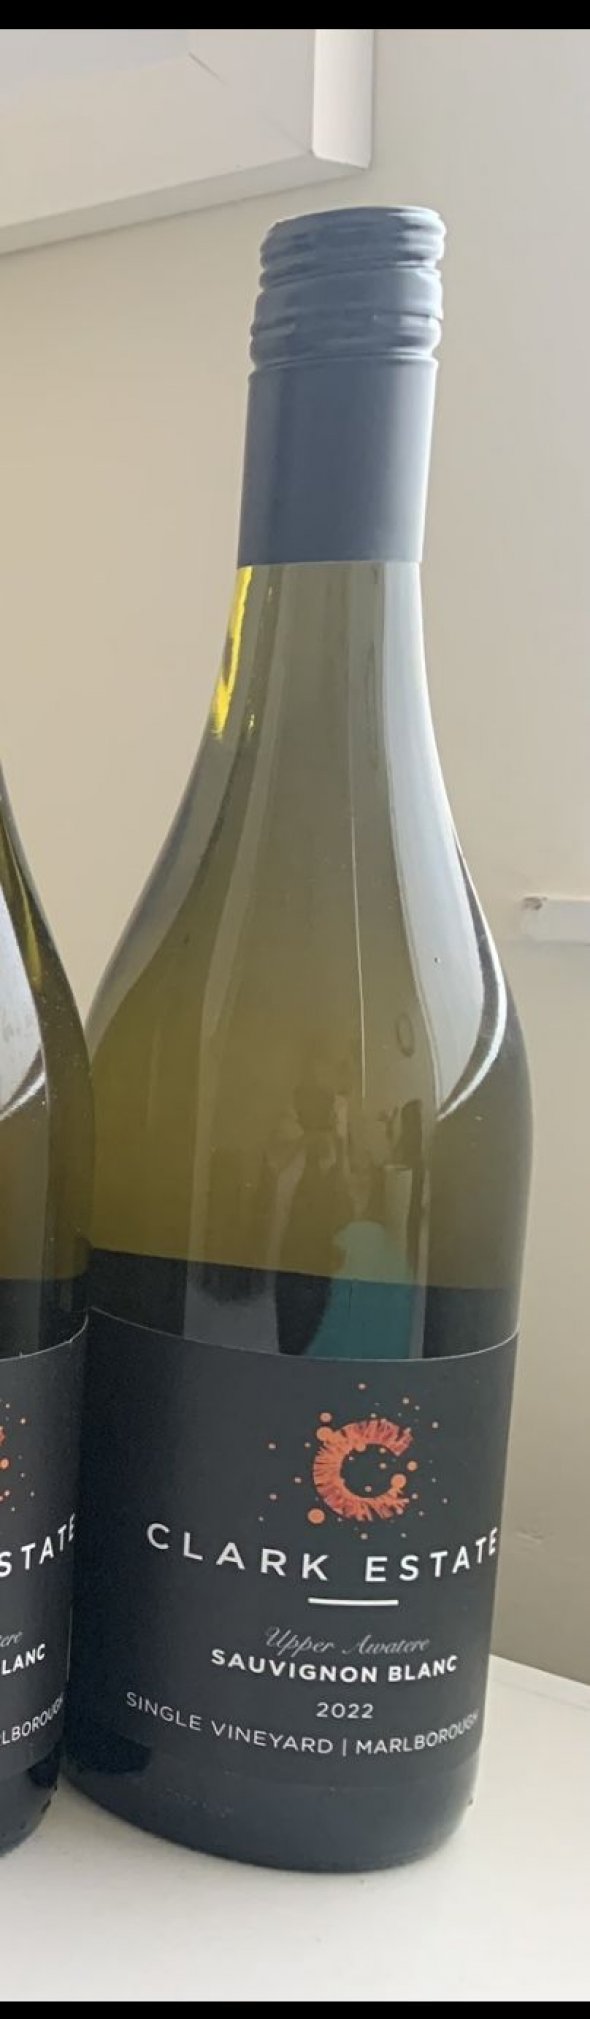 Sauvignon Blanc Clark Estate , Marlborough New Zealand, vintage 2022 - 12 Bottles 